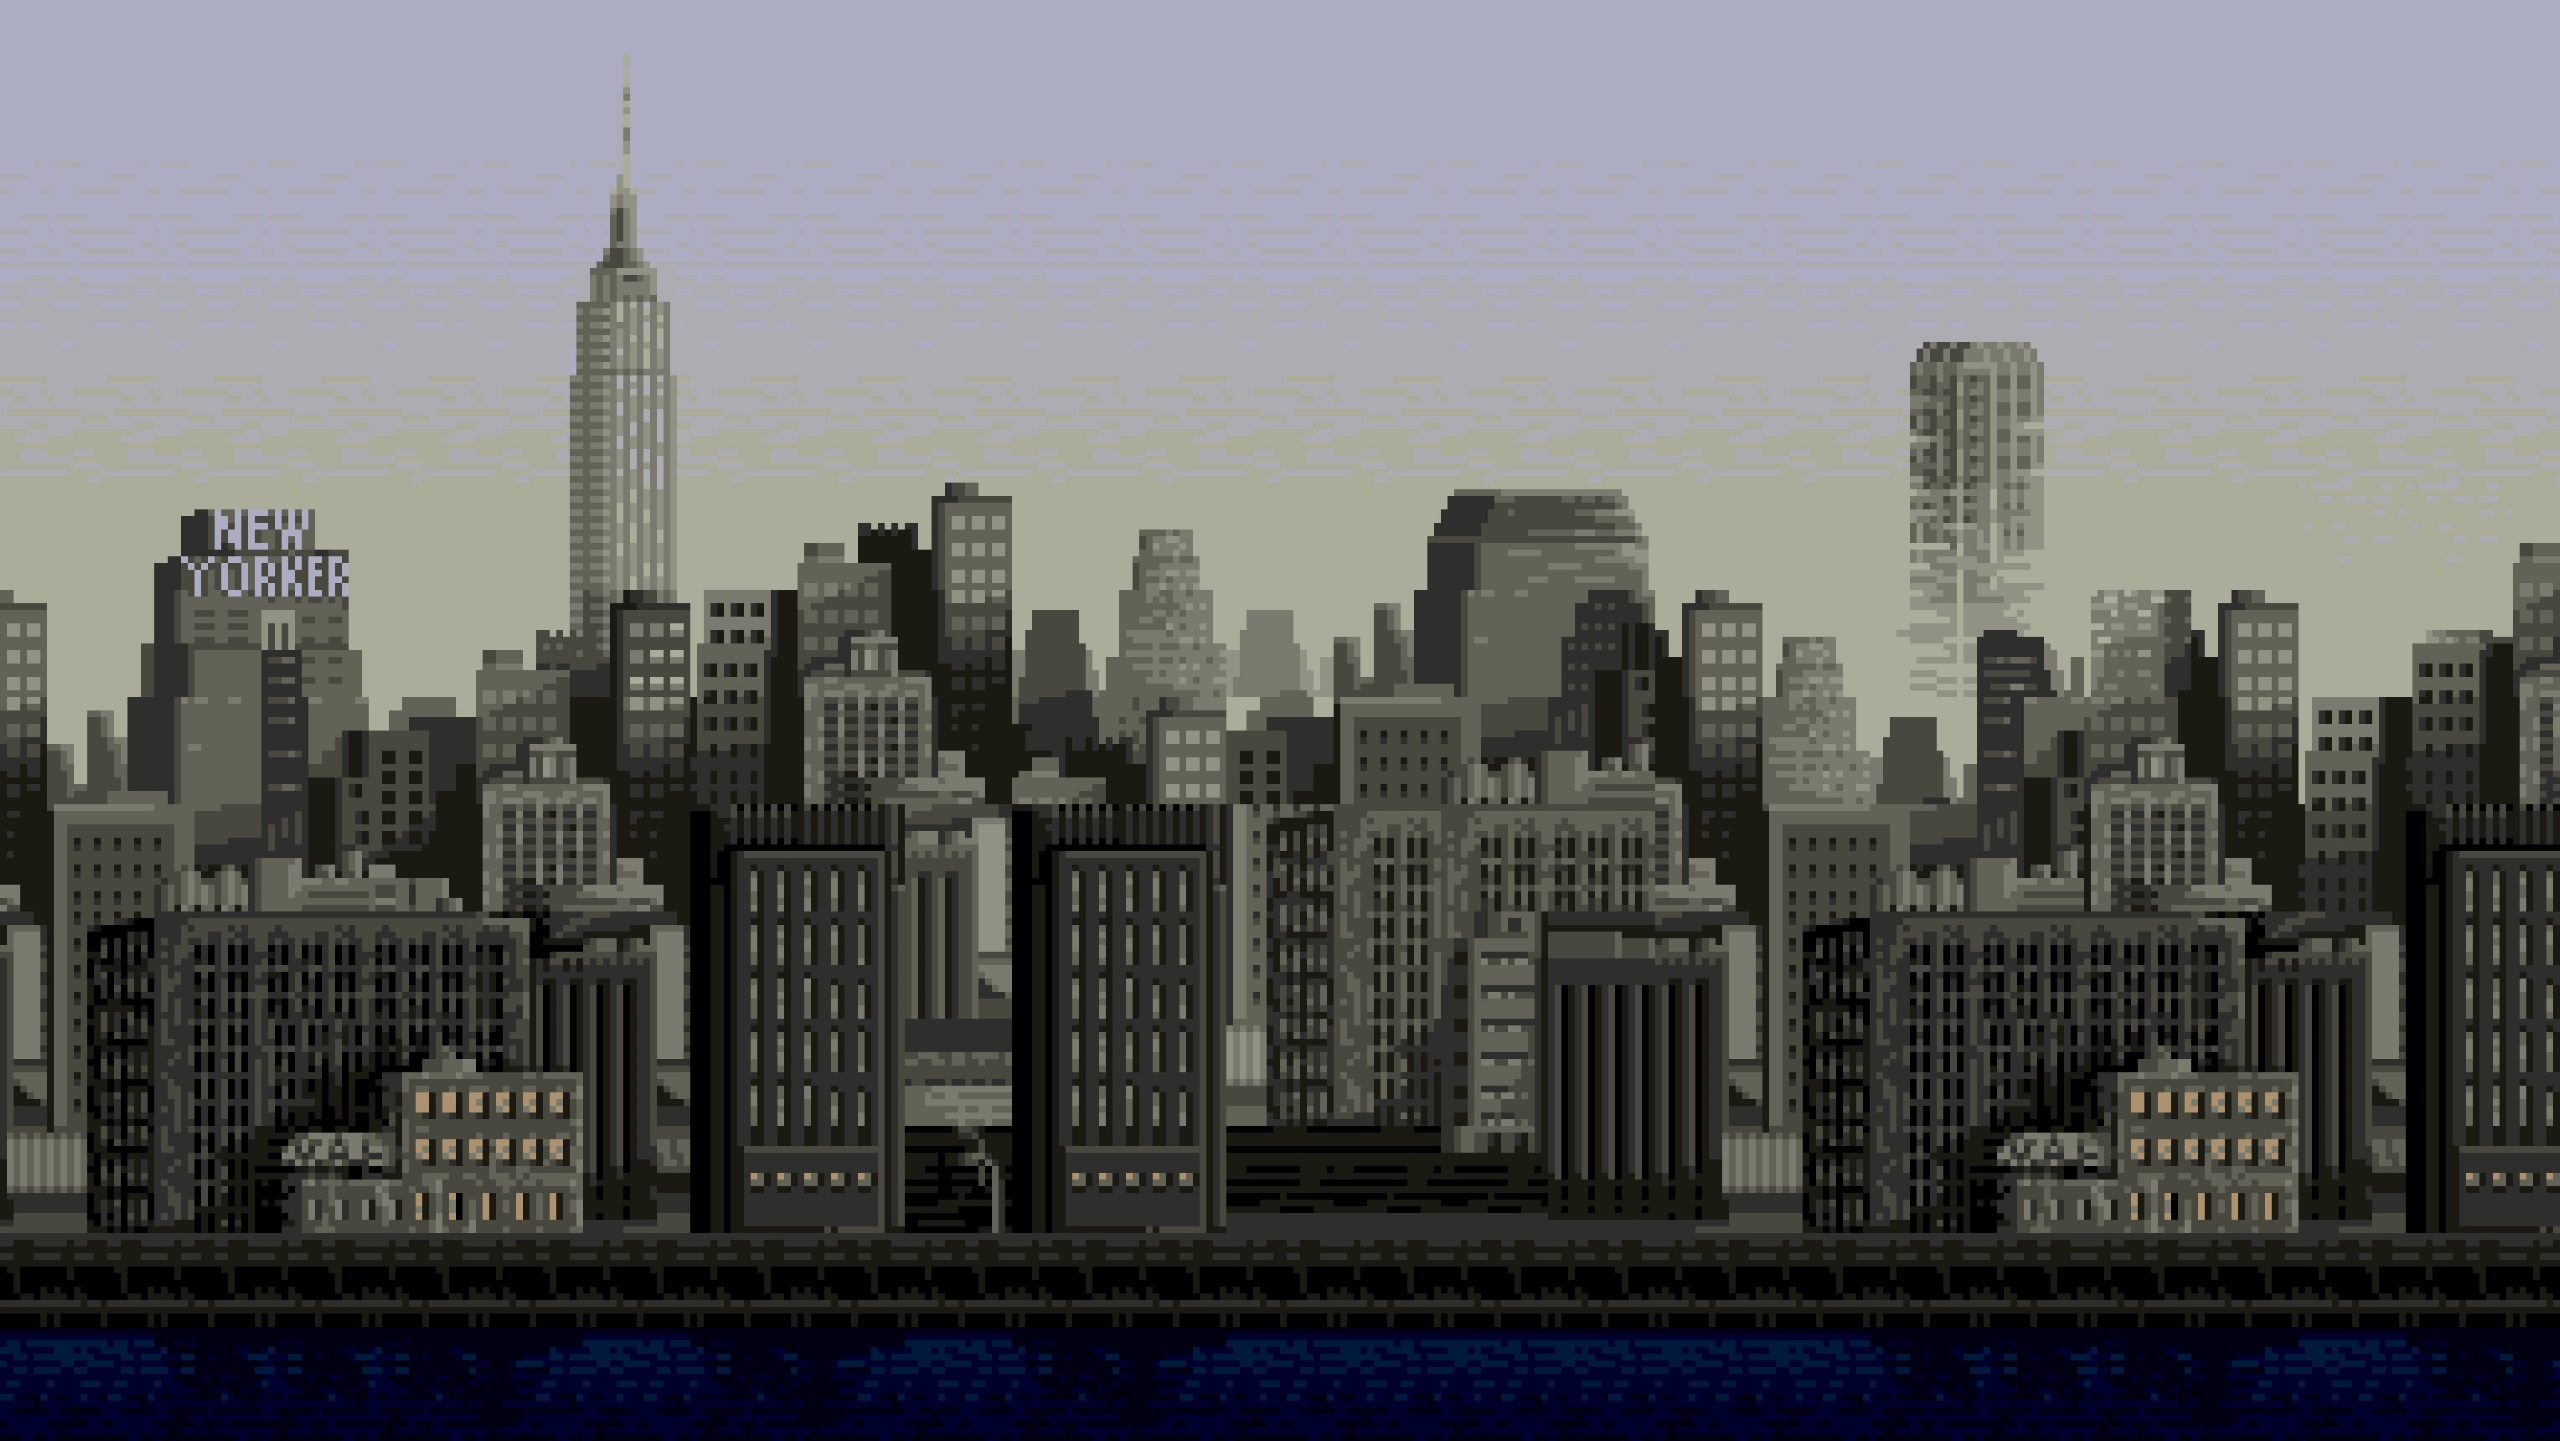 8 Bit Building Cityscape Empire State Building New York 2560x1441